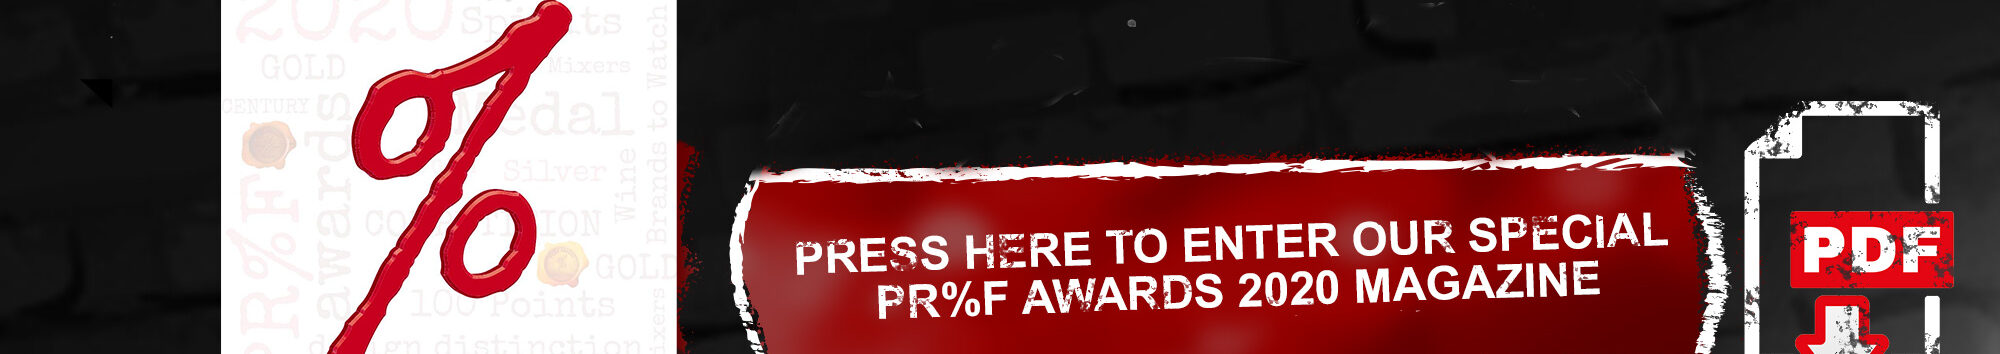 Press Here to Enter our Special PR%F Awards 2020 Magazine